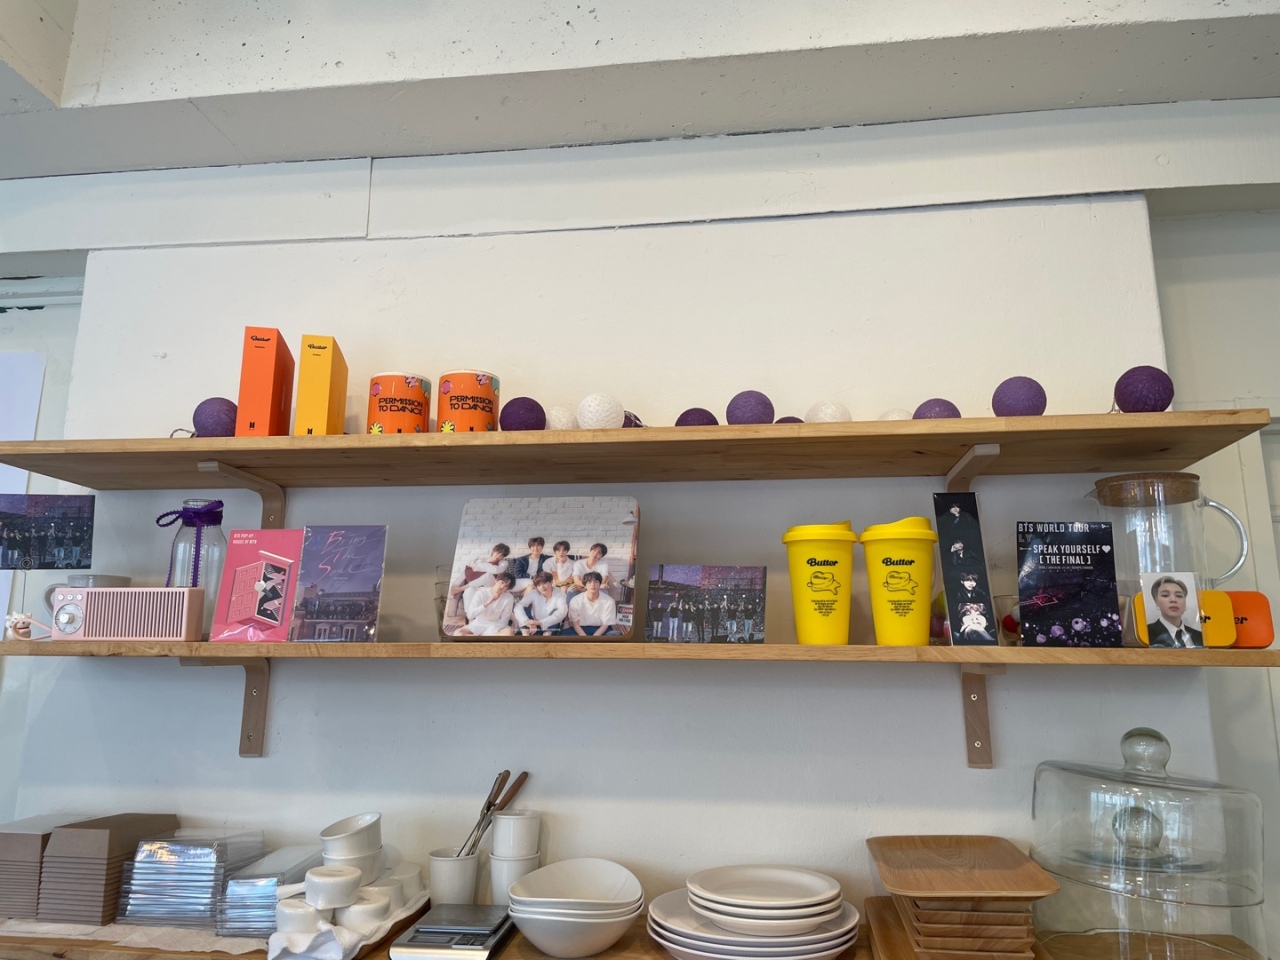 BTS merchandise and pictures are displayed on the shelf. (Kweon Ha-bin/The Korea Herald)